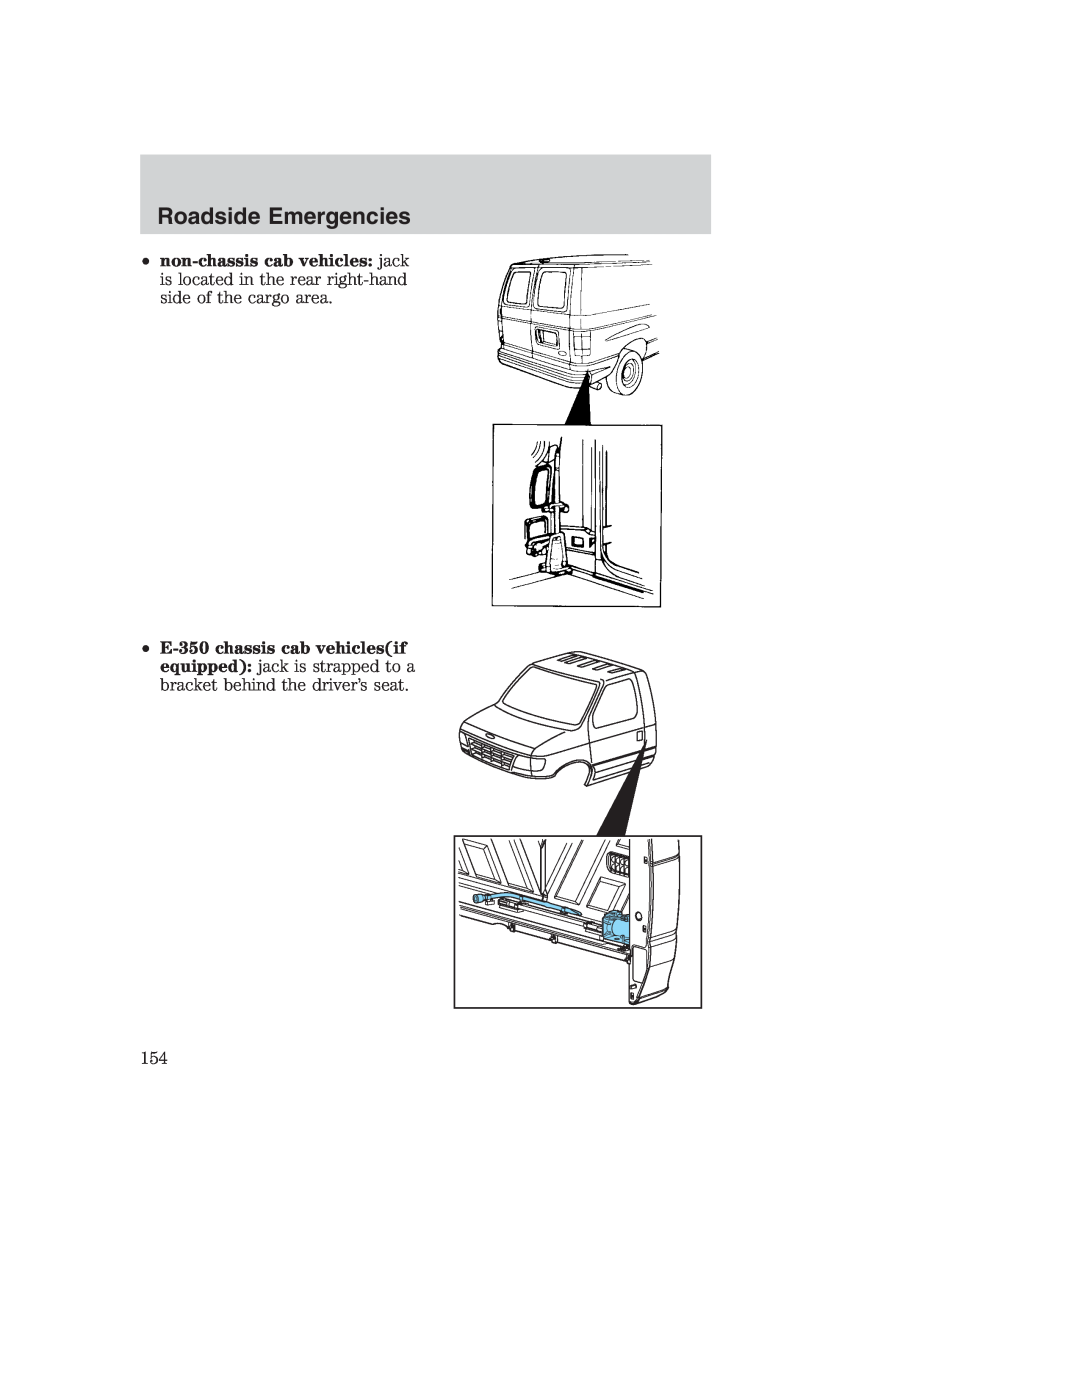 Ford AM/FM stereo manual Roadside Emergencies 